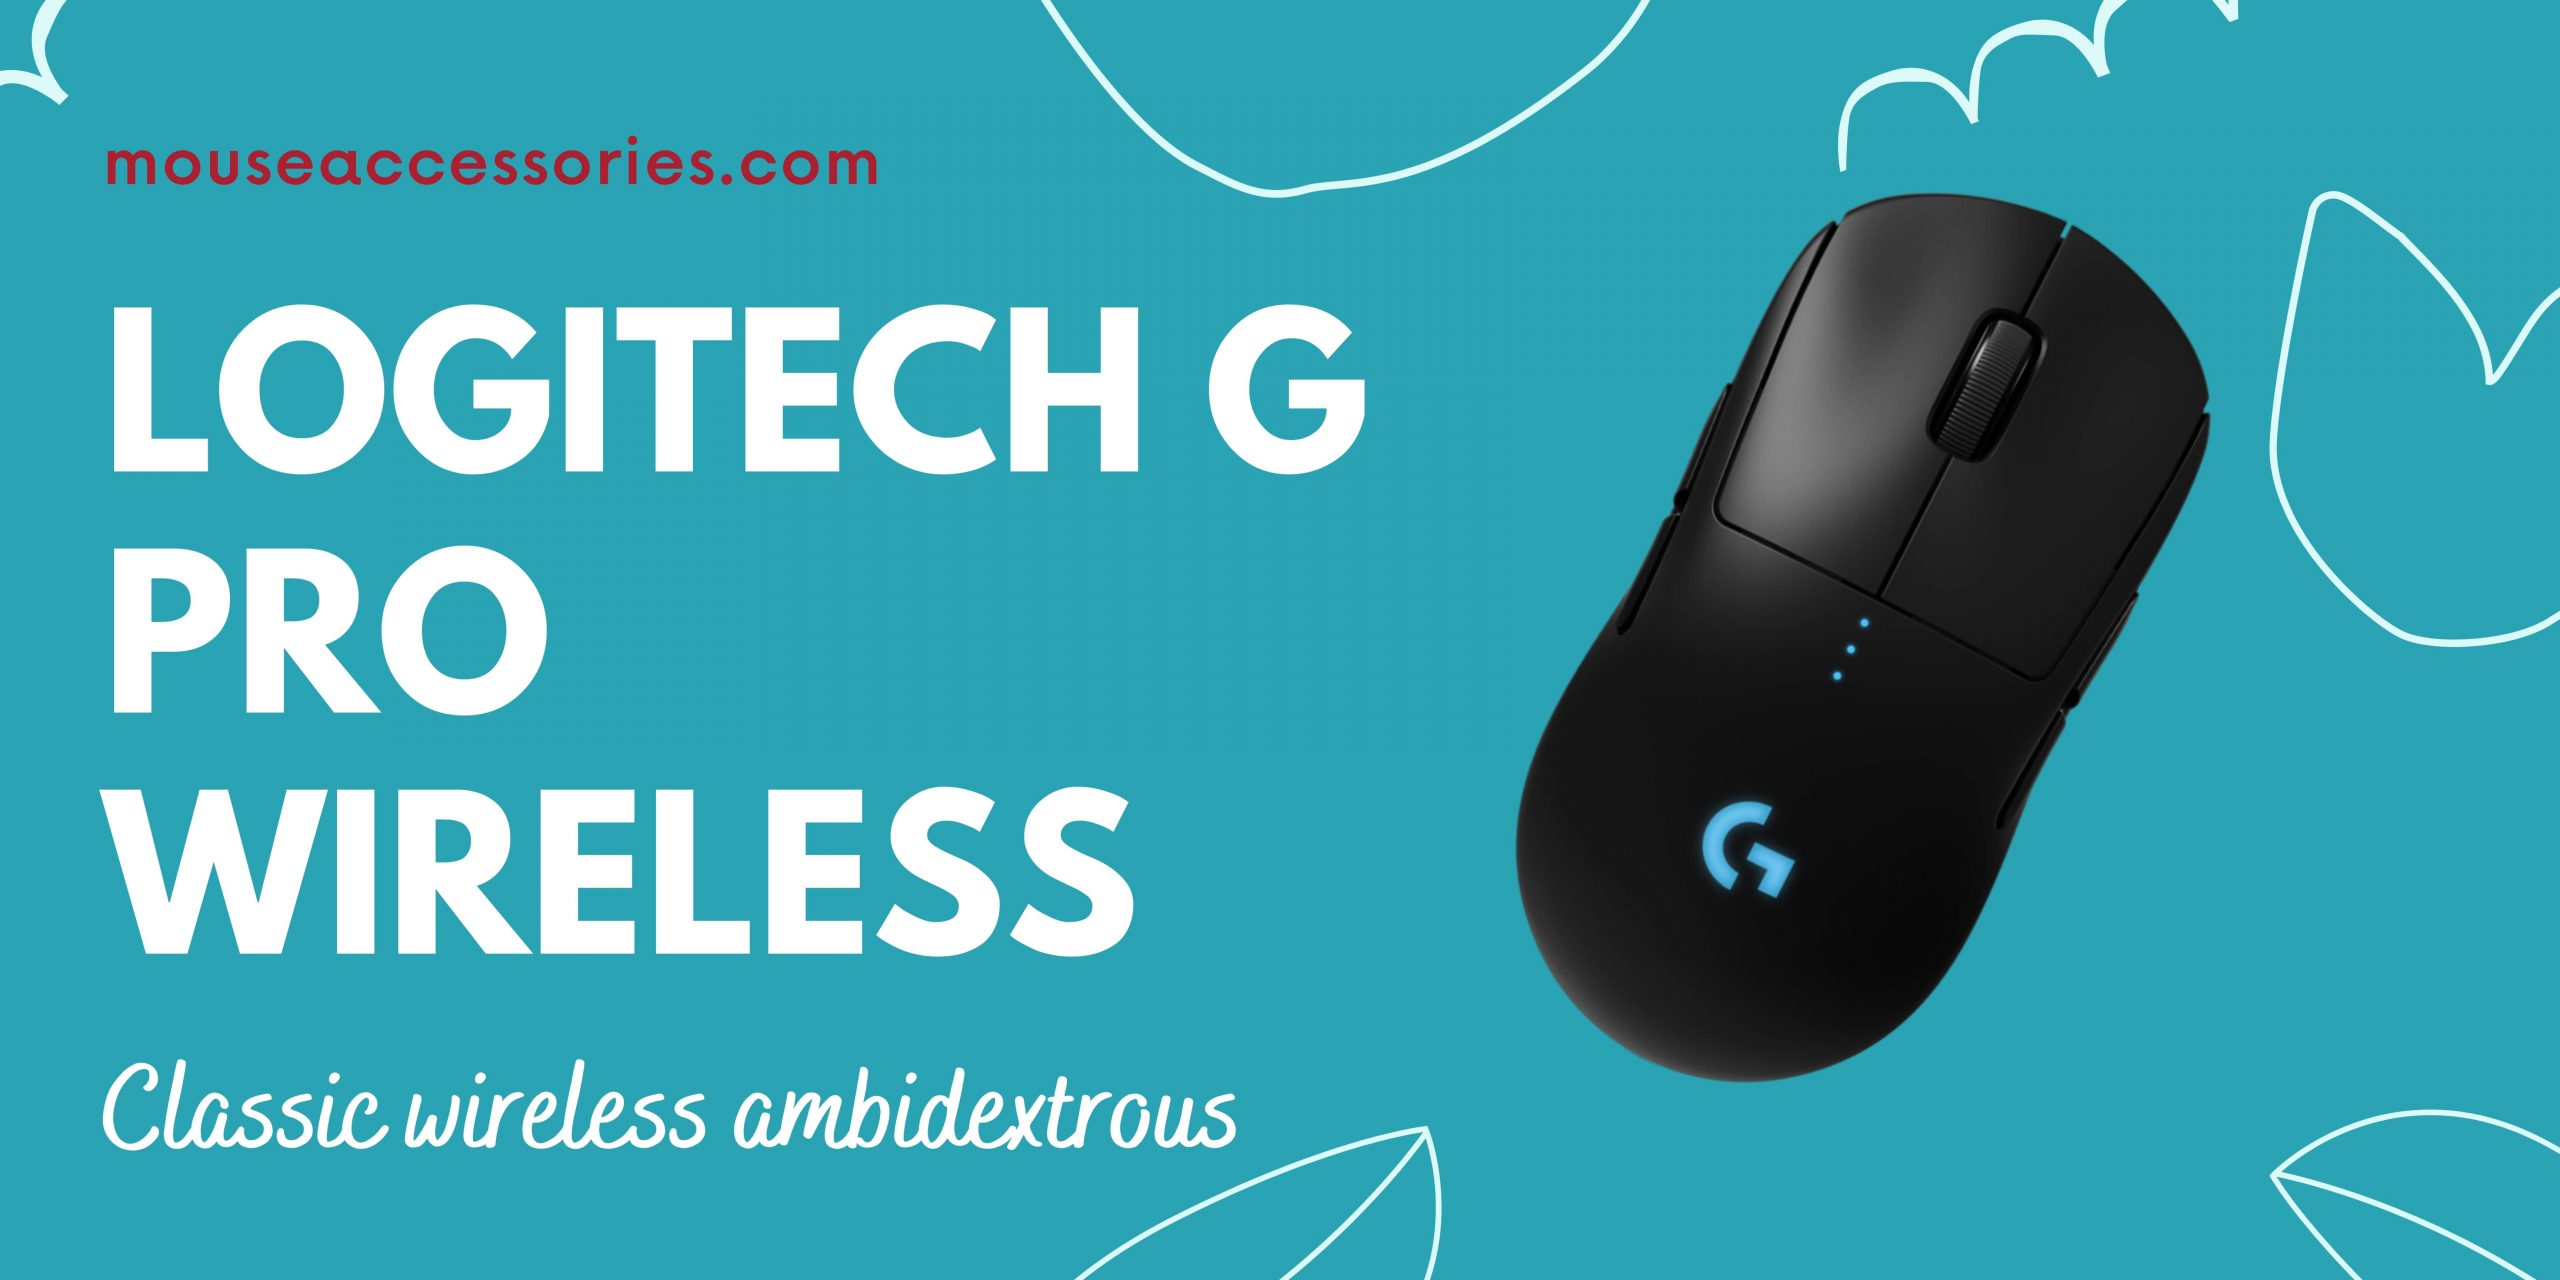 Logitech G Pro Wireless Review